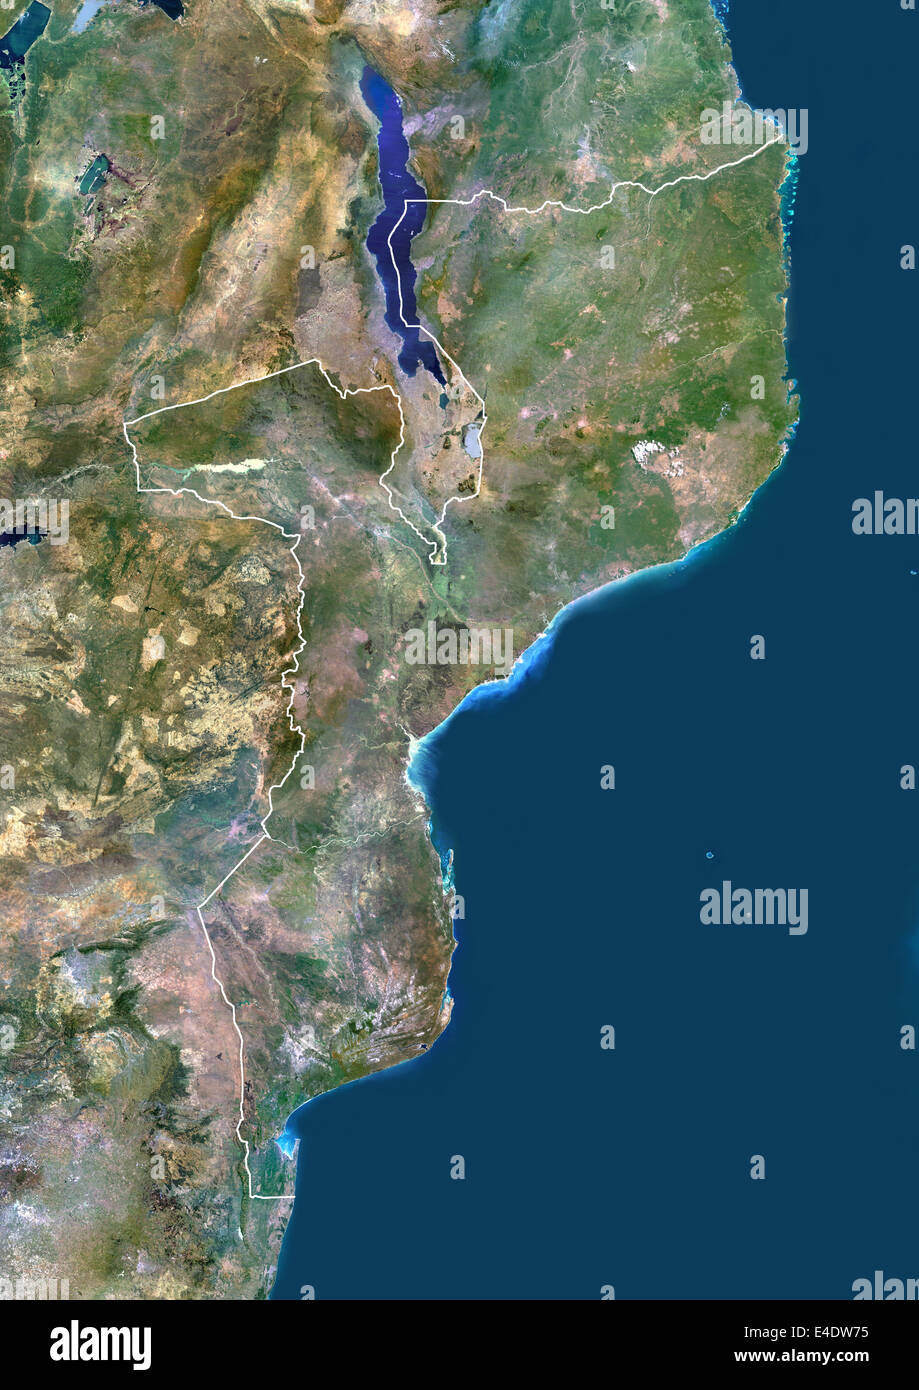 Mosambik, Afrika, Echtfarben-Satellitenbild mit Rand. Satellitenansicht von Mosambik (mit Rand). Dieses Bild wurde erstellt Stockfoto